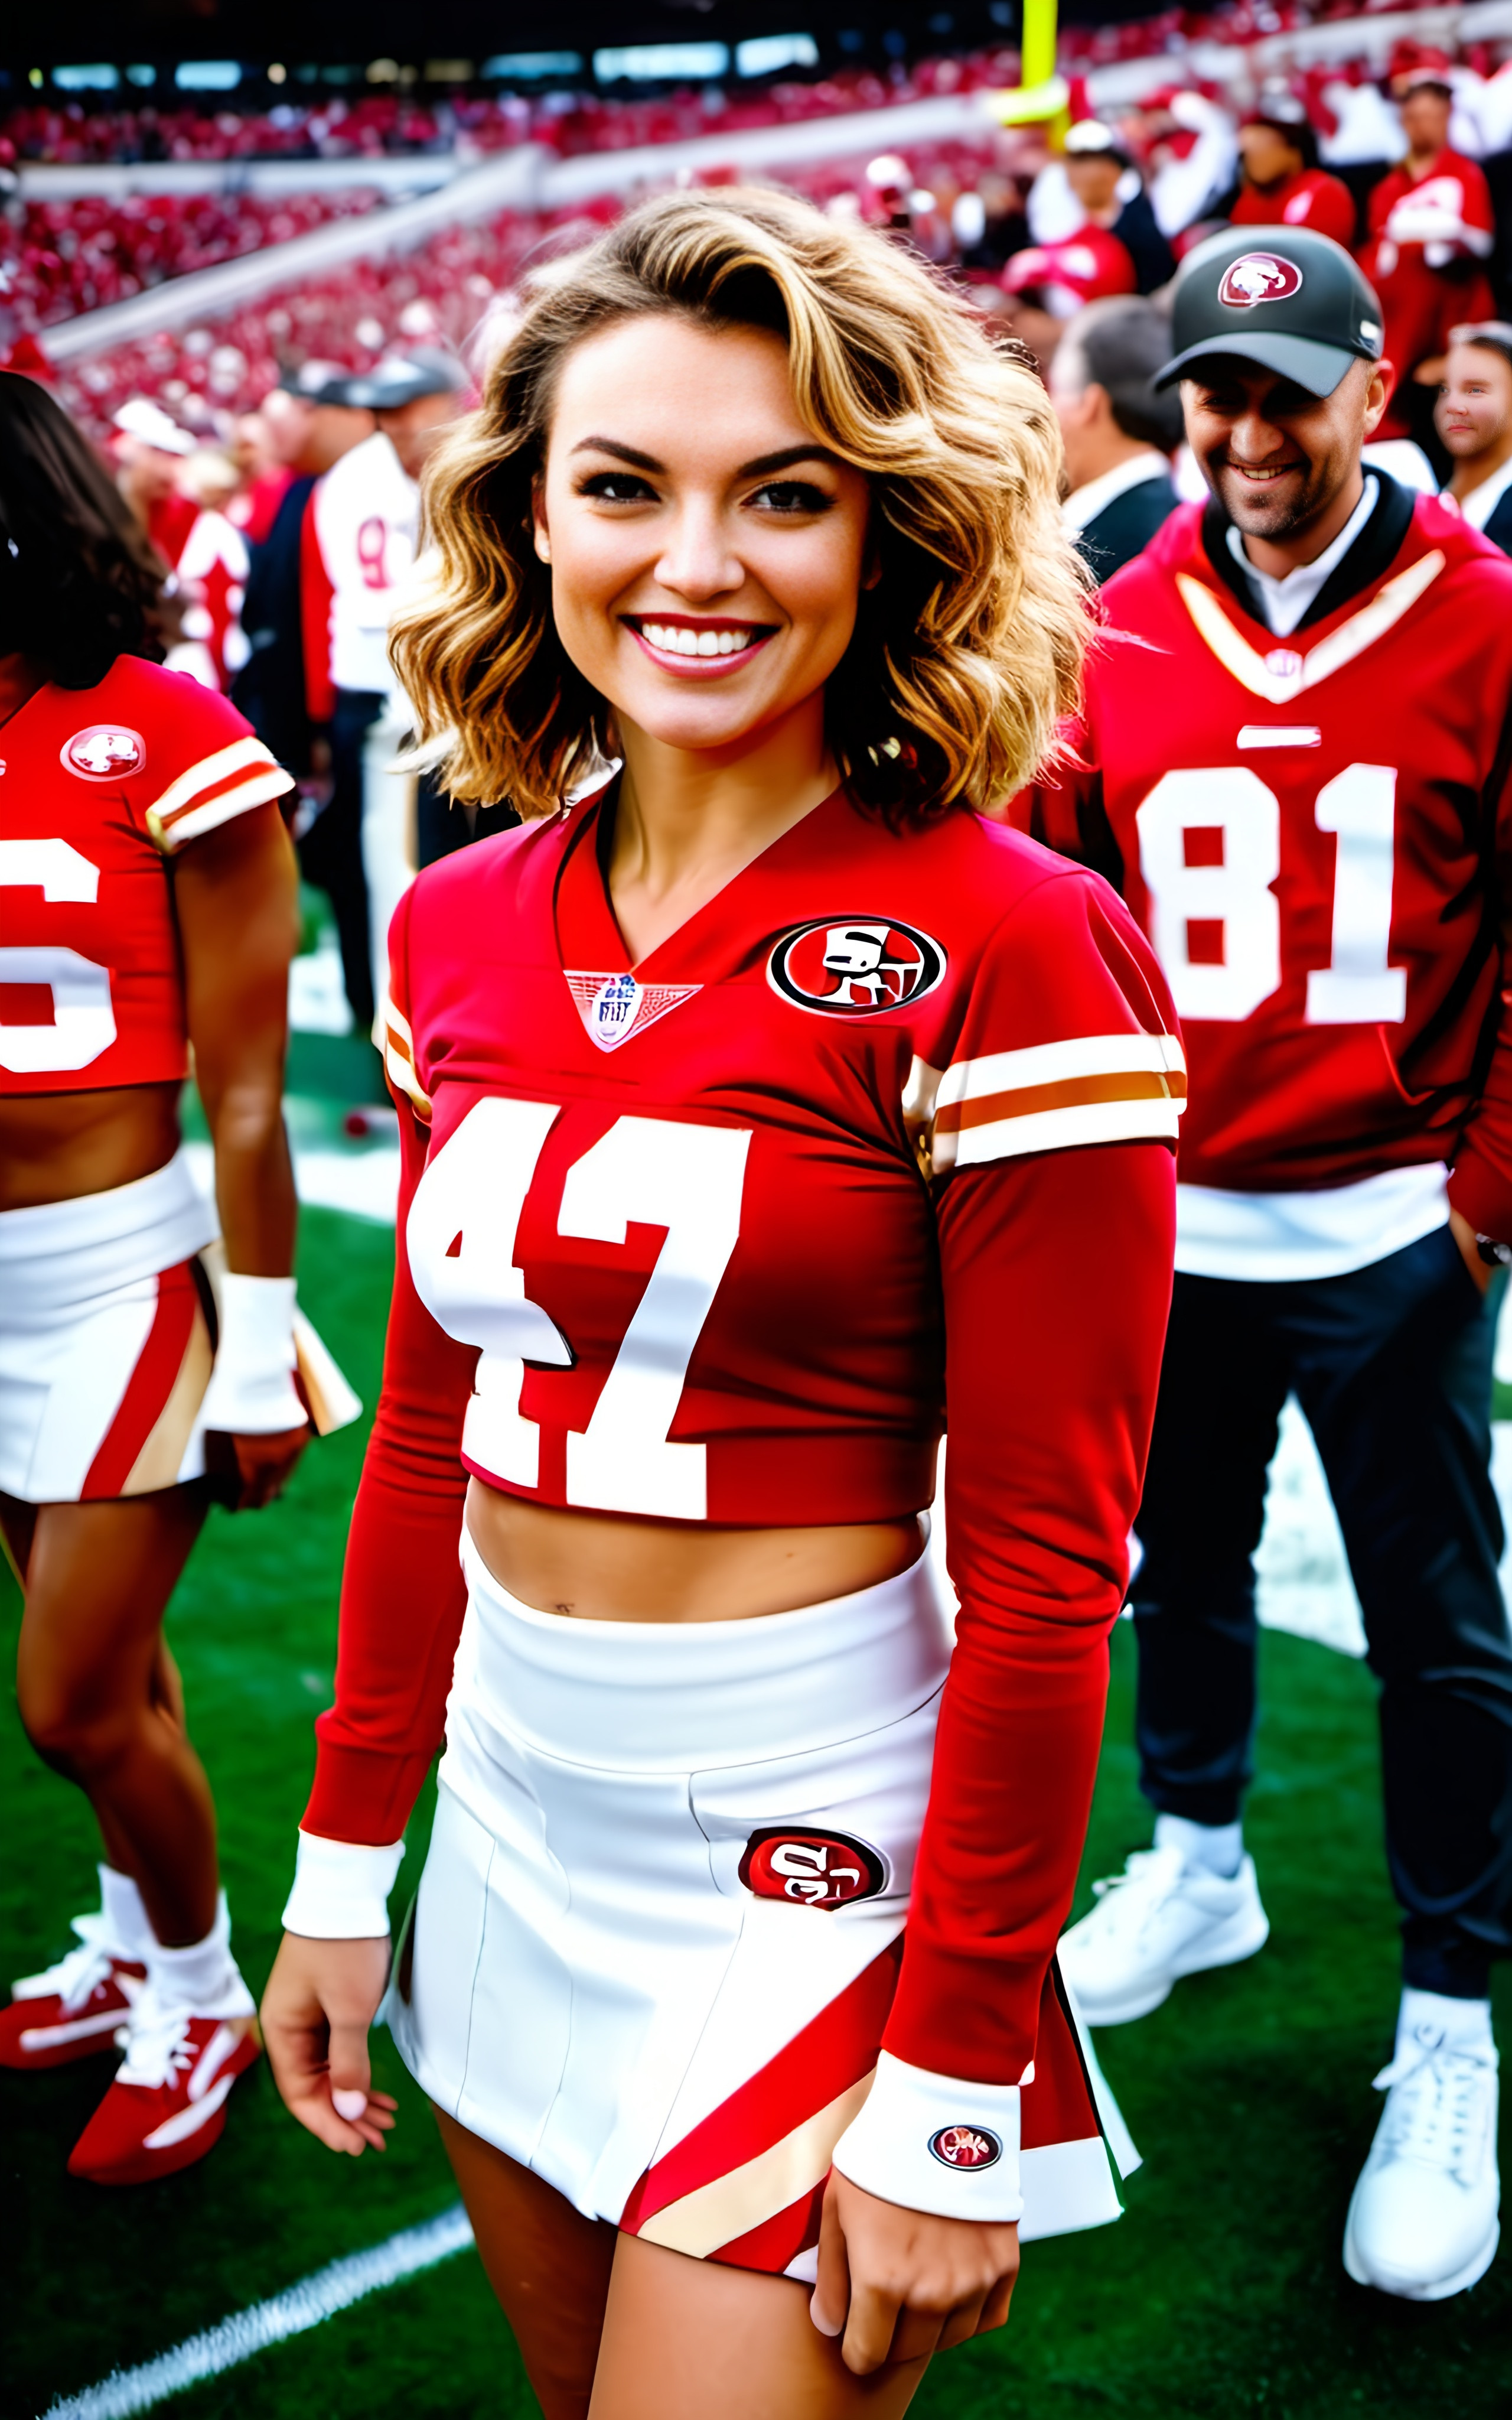  Zubaz NFL Women's San Francisco 49ers Red/Bronze